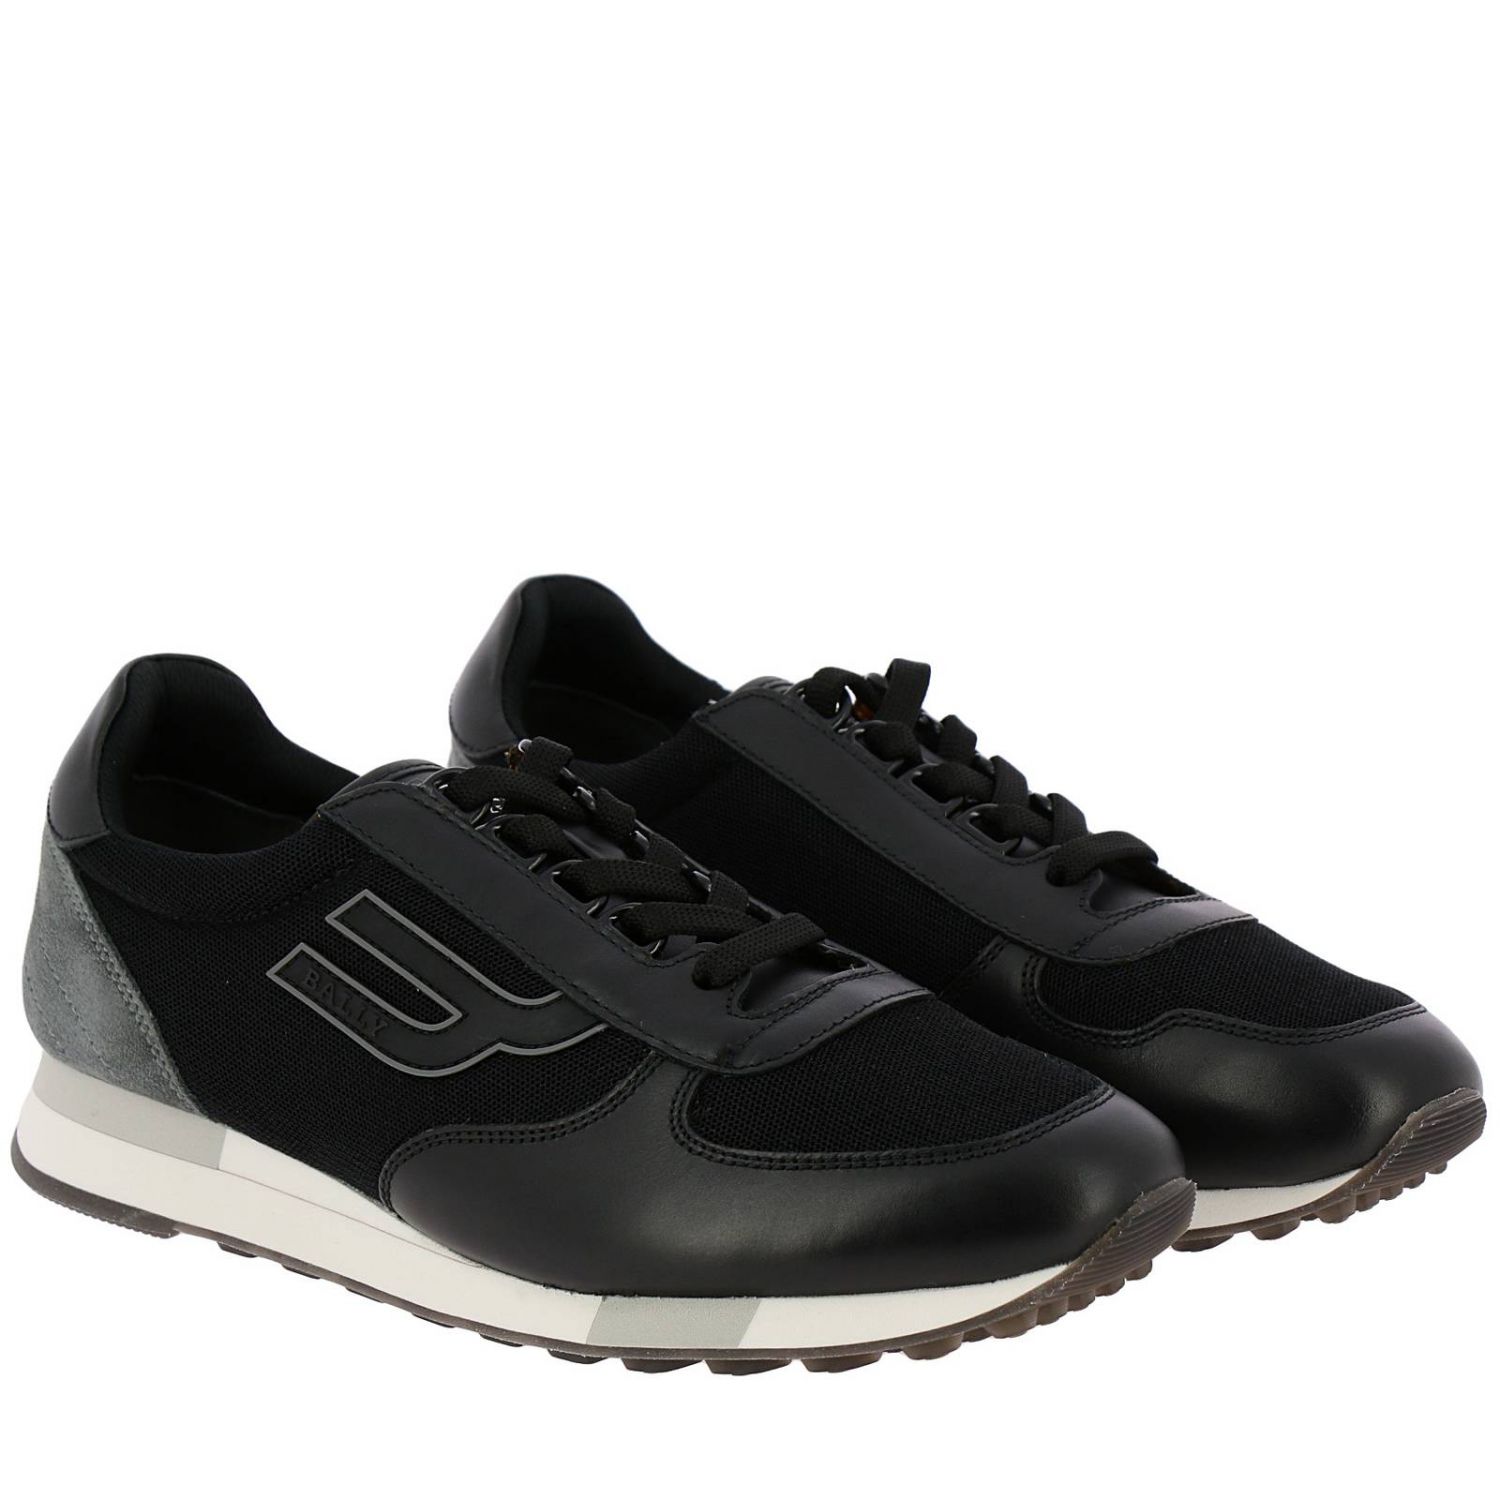 Shoes men Bally | Sneakers Bally Men Black | Sneakers Bally 593637 ...